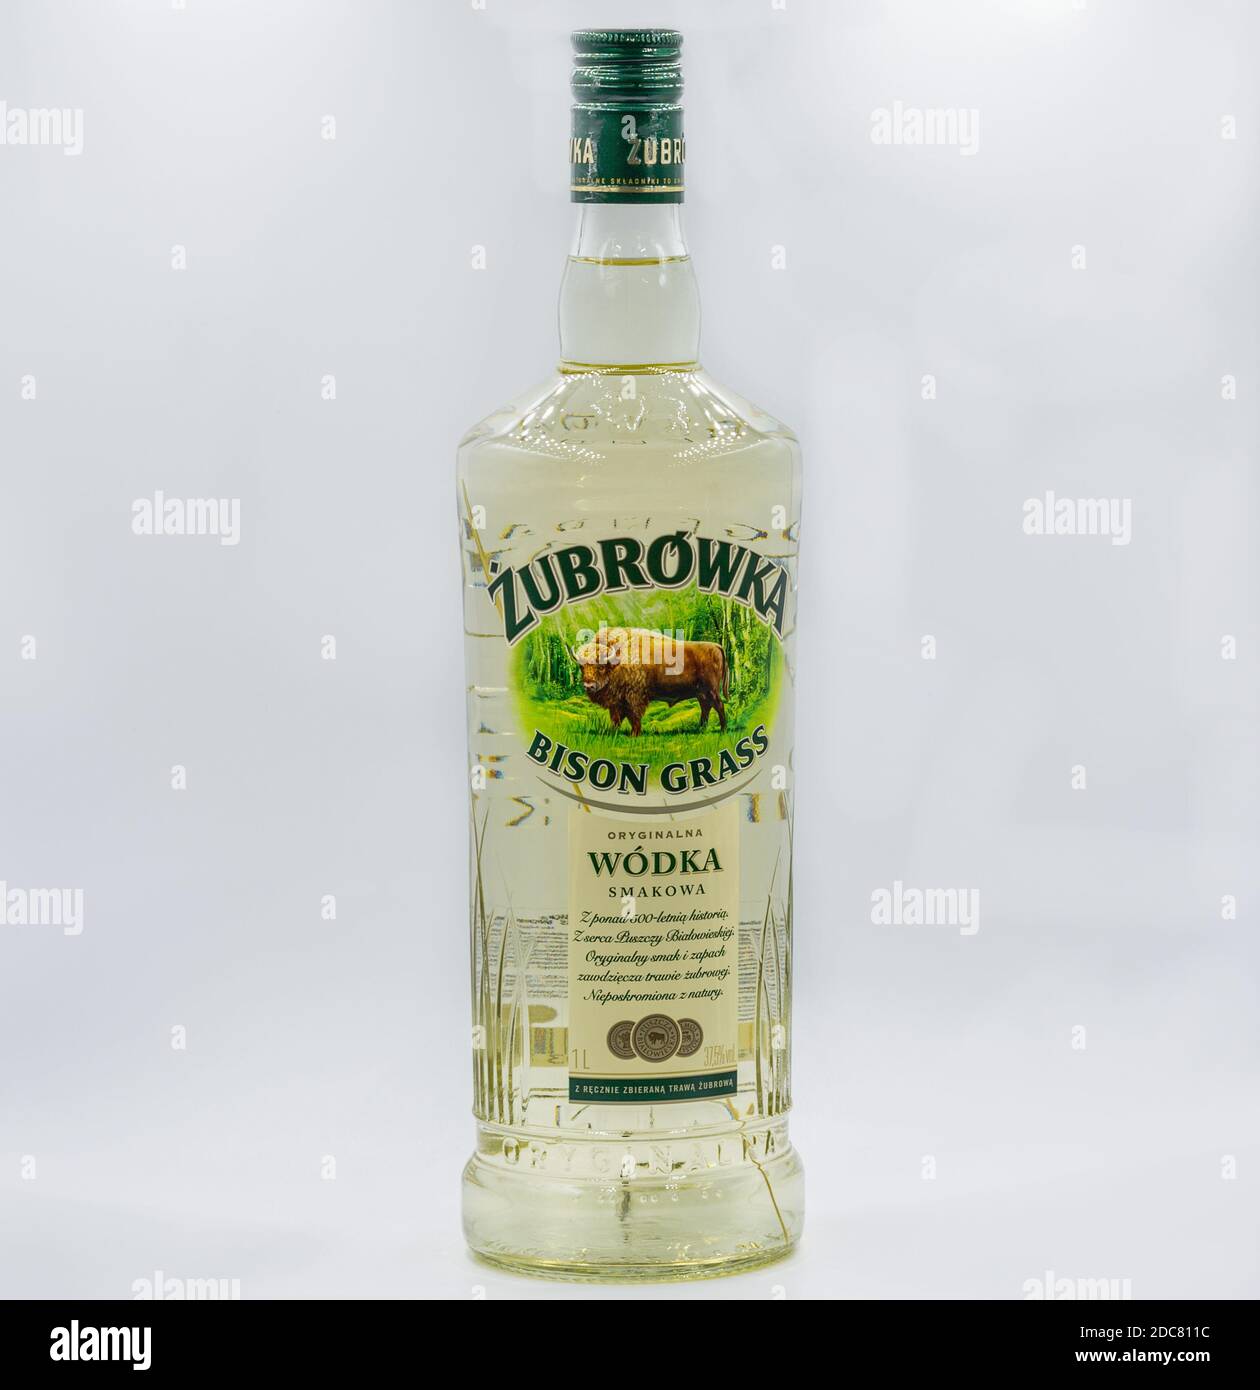 KYIV, UKRAINE - OCTOBER 23, 2020: Zubrowka Bison Grass vodka bottle closeup against white background. It is a flavored Polish vodka liqueur, which con Stock Photo